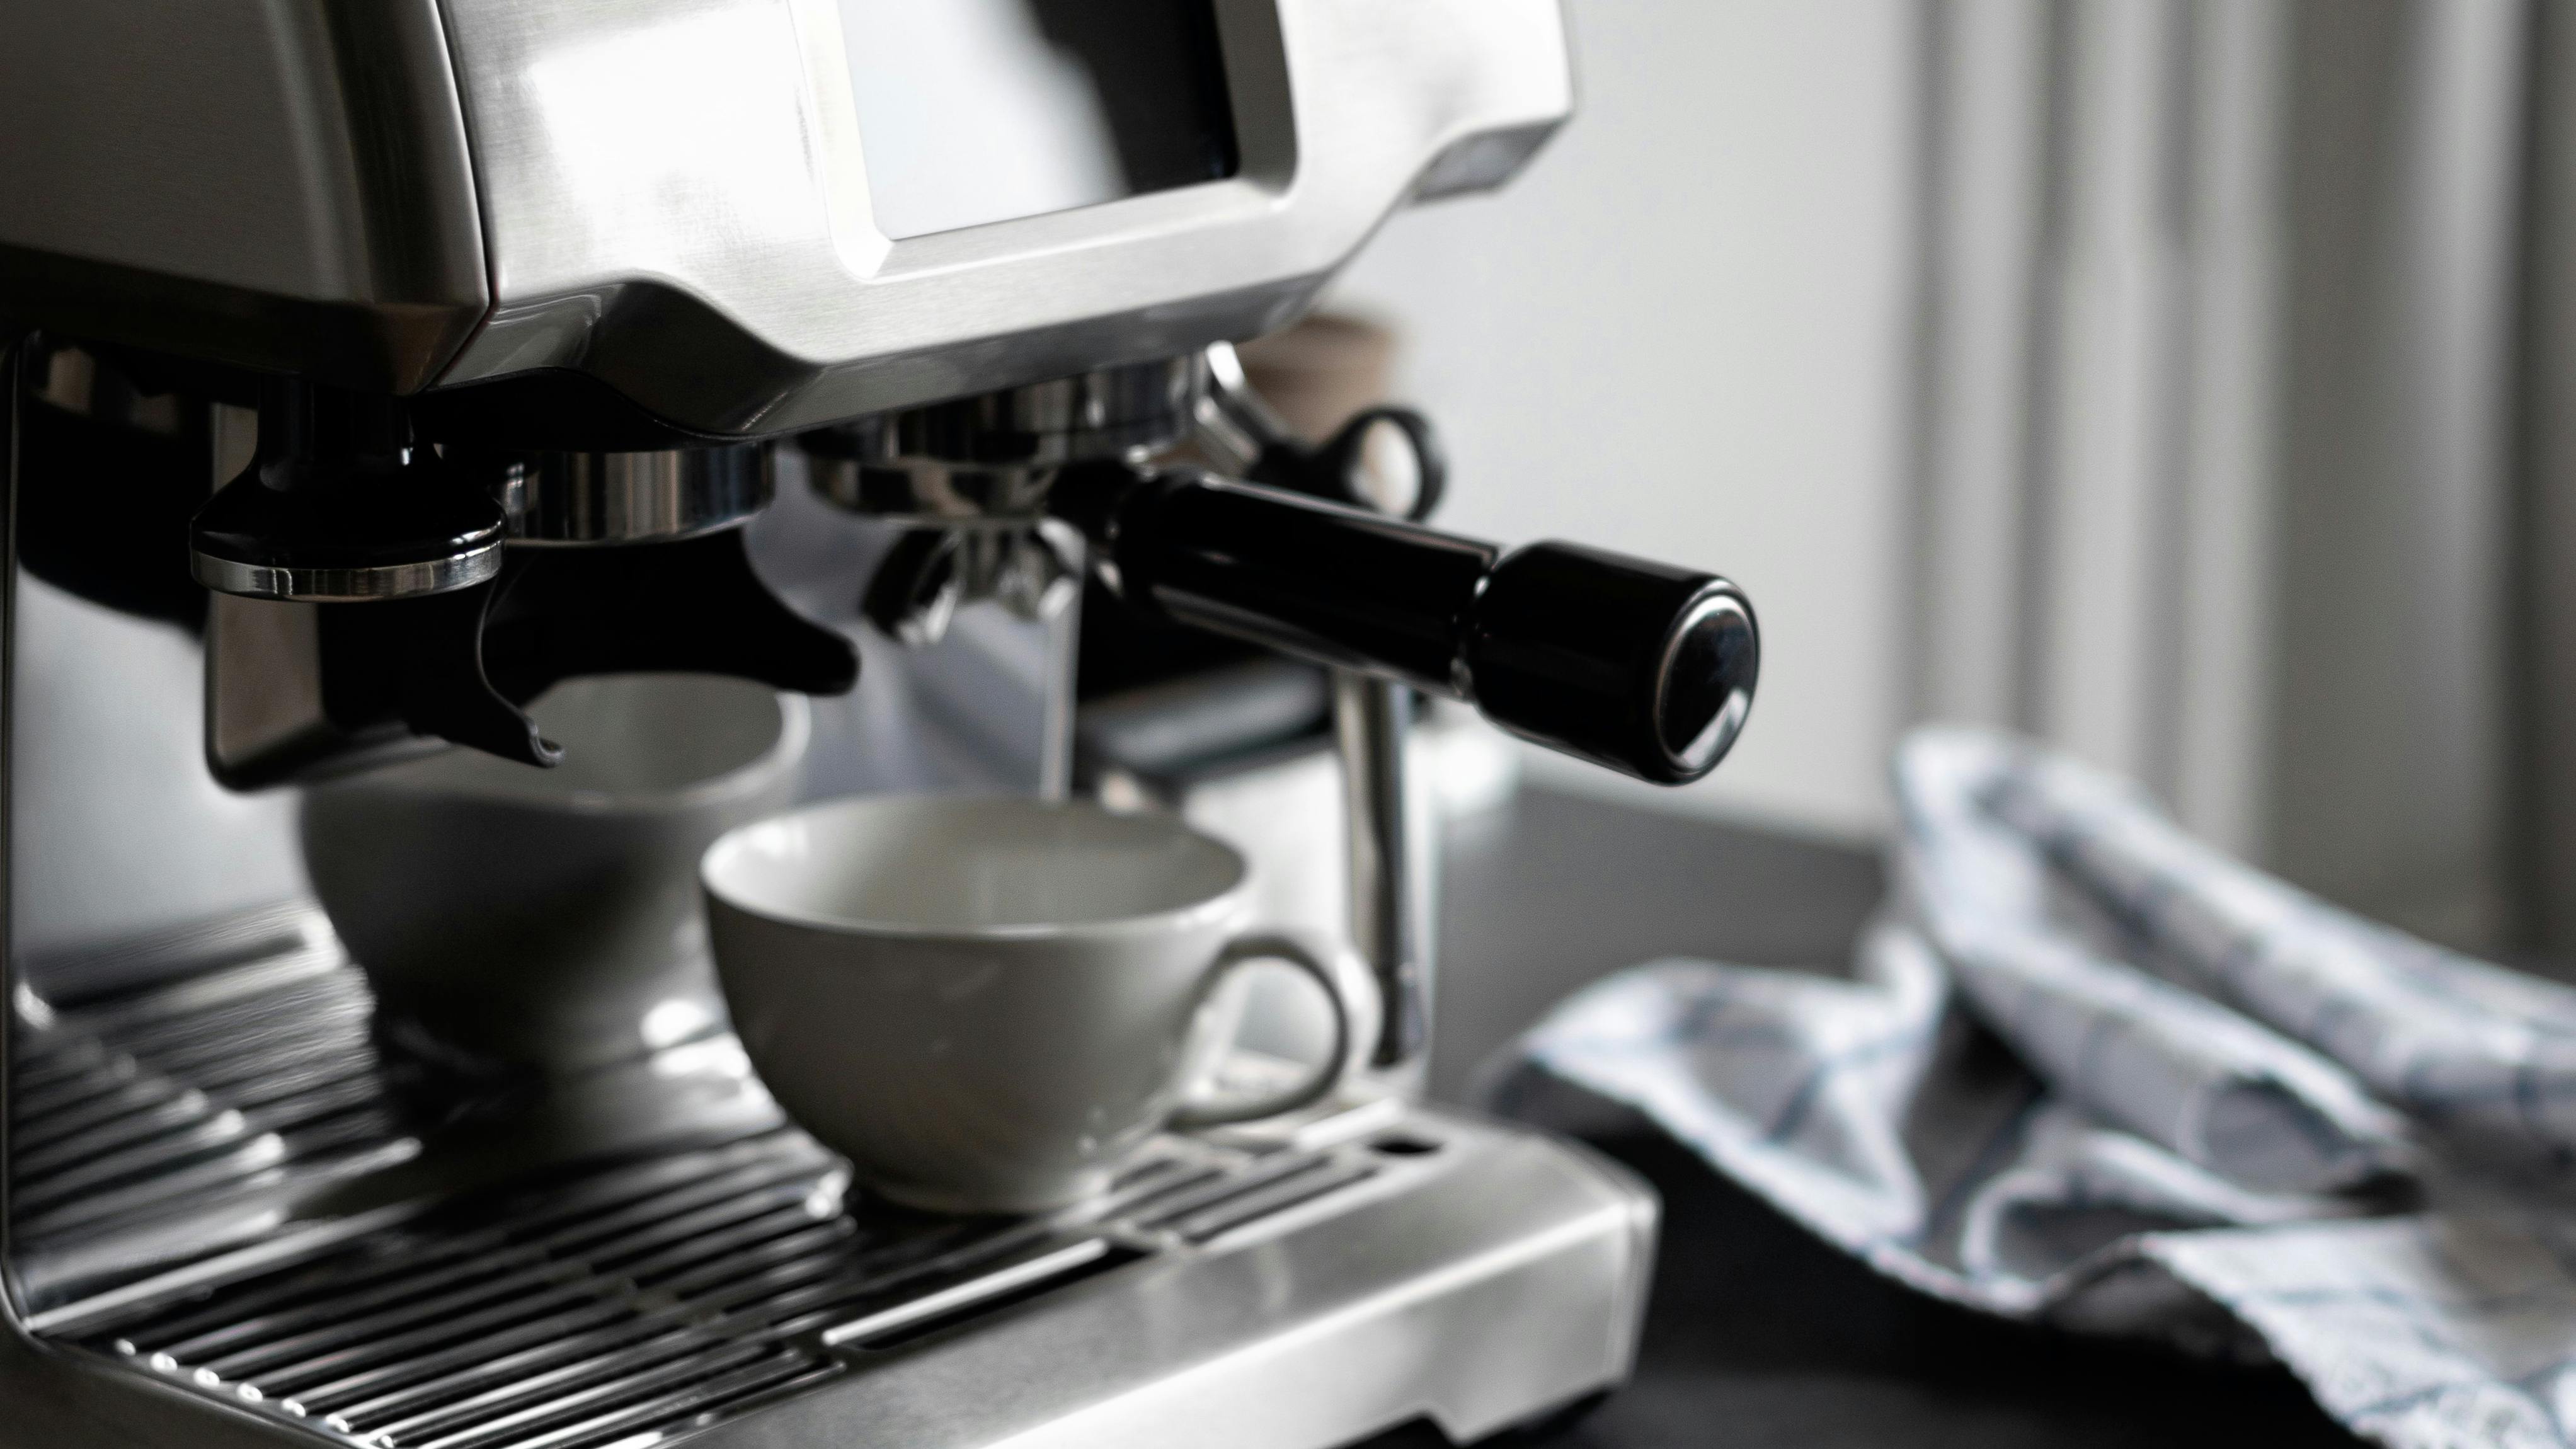 Espresso machine with an espresso cup